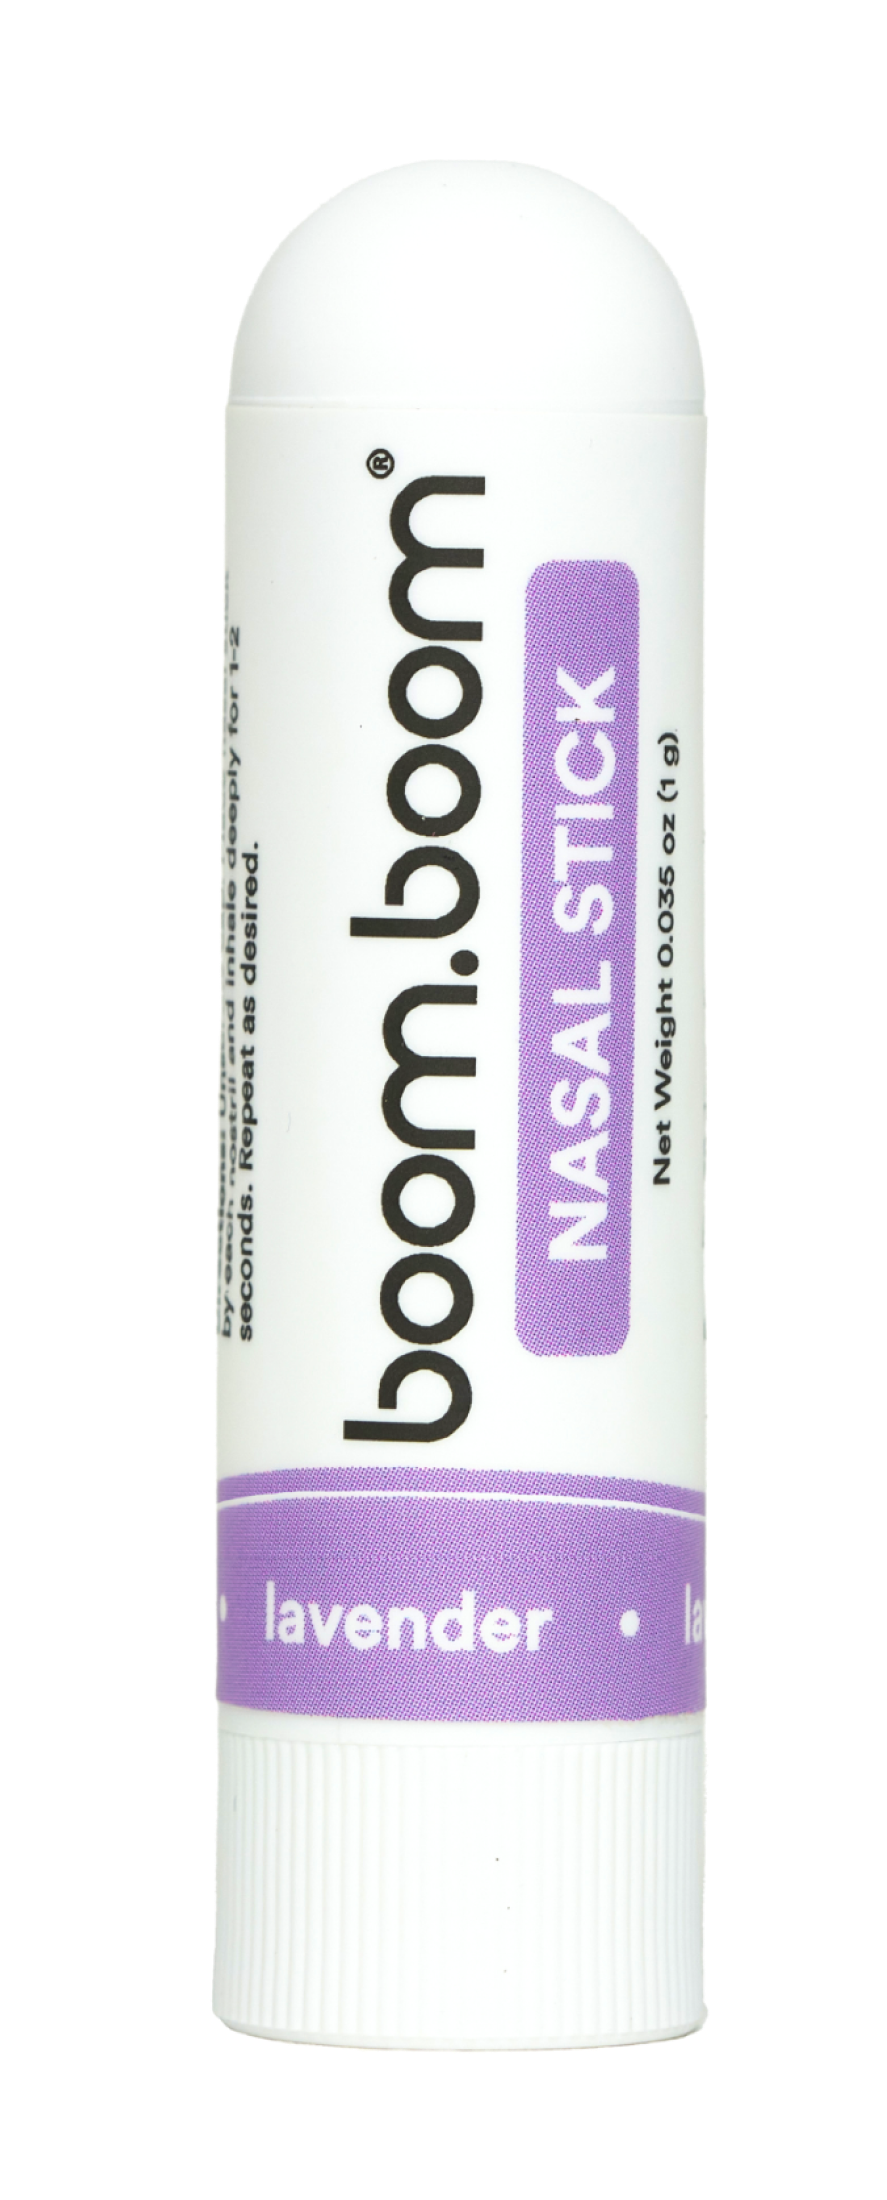 Lavender BoomBoom Single Nasal Stick  | Boosts Focus + Enhances Breathing | Provides Fresh Cooling Sensation | Aromatherapy Inhaler Made with Essential Oils + Menthol